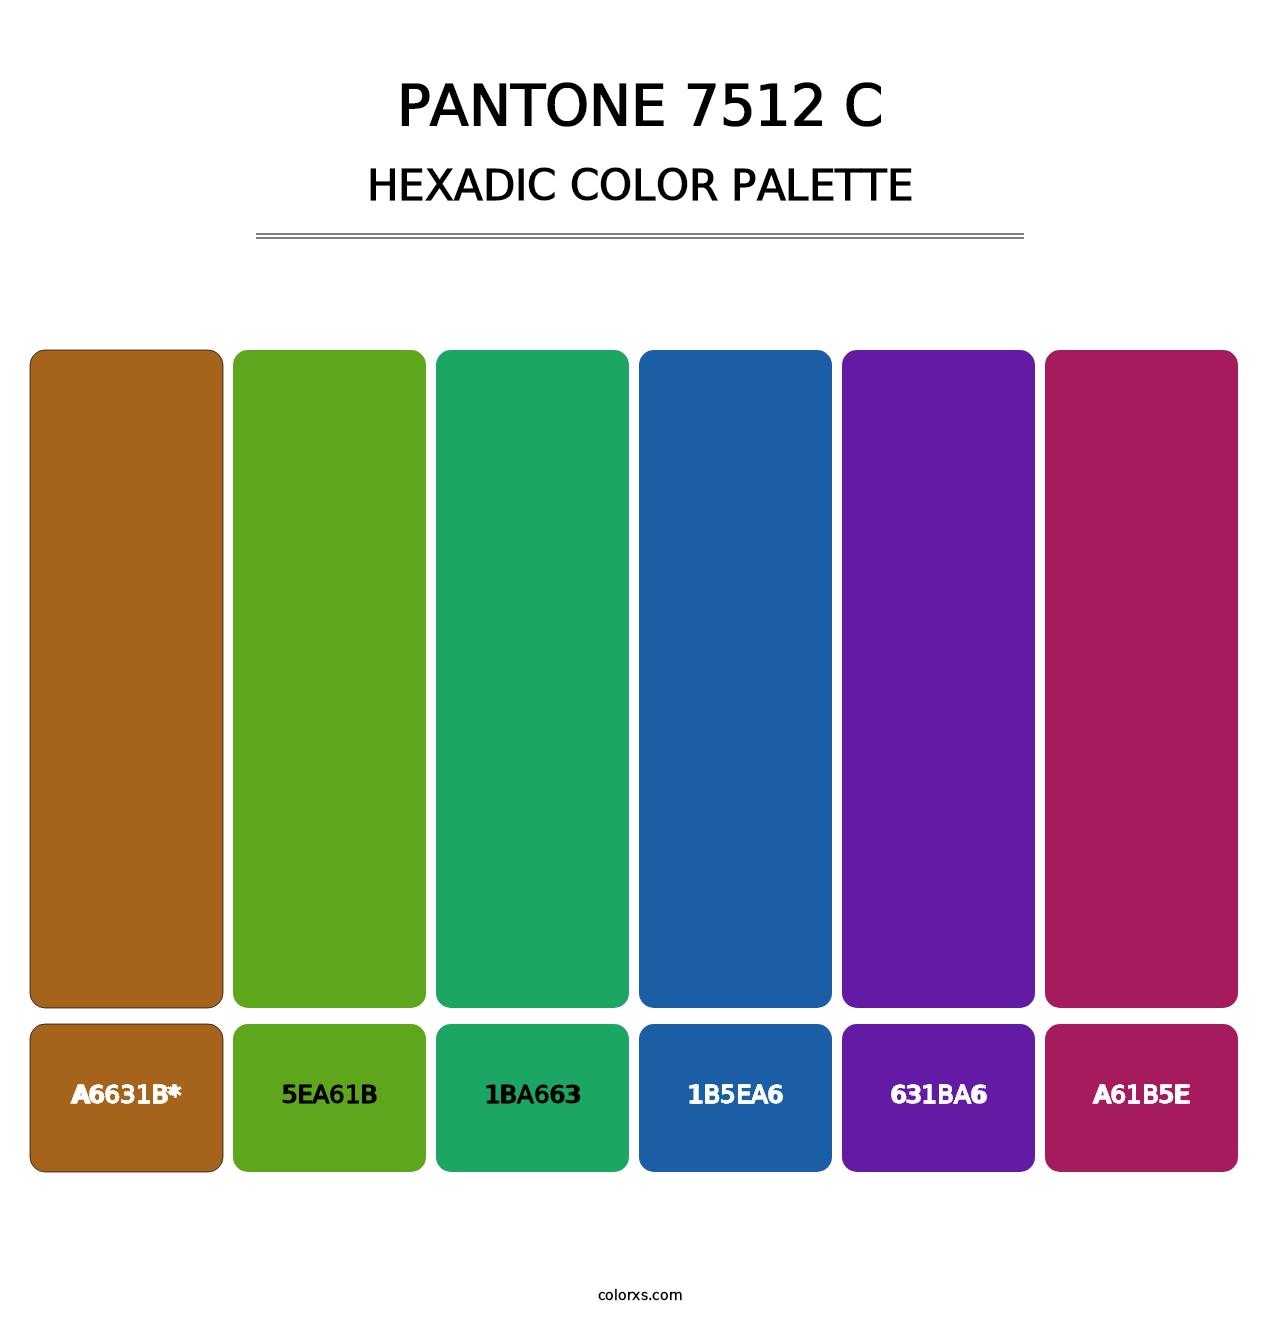 PANTONE 7512 C - Hexadic Color Palette